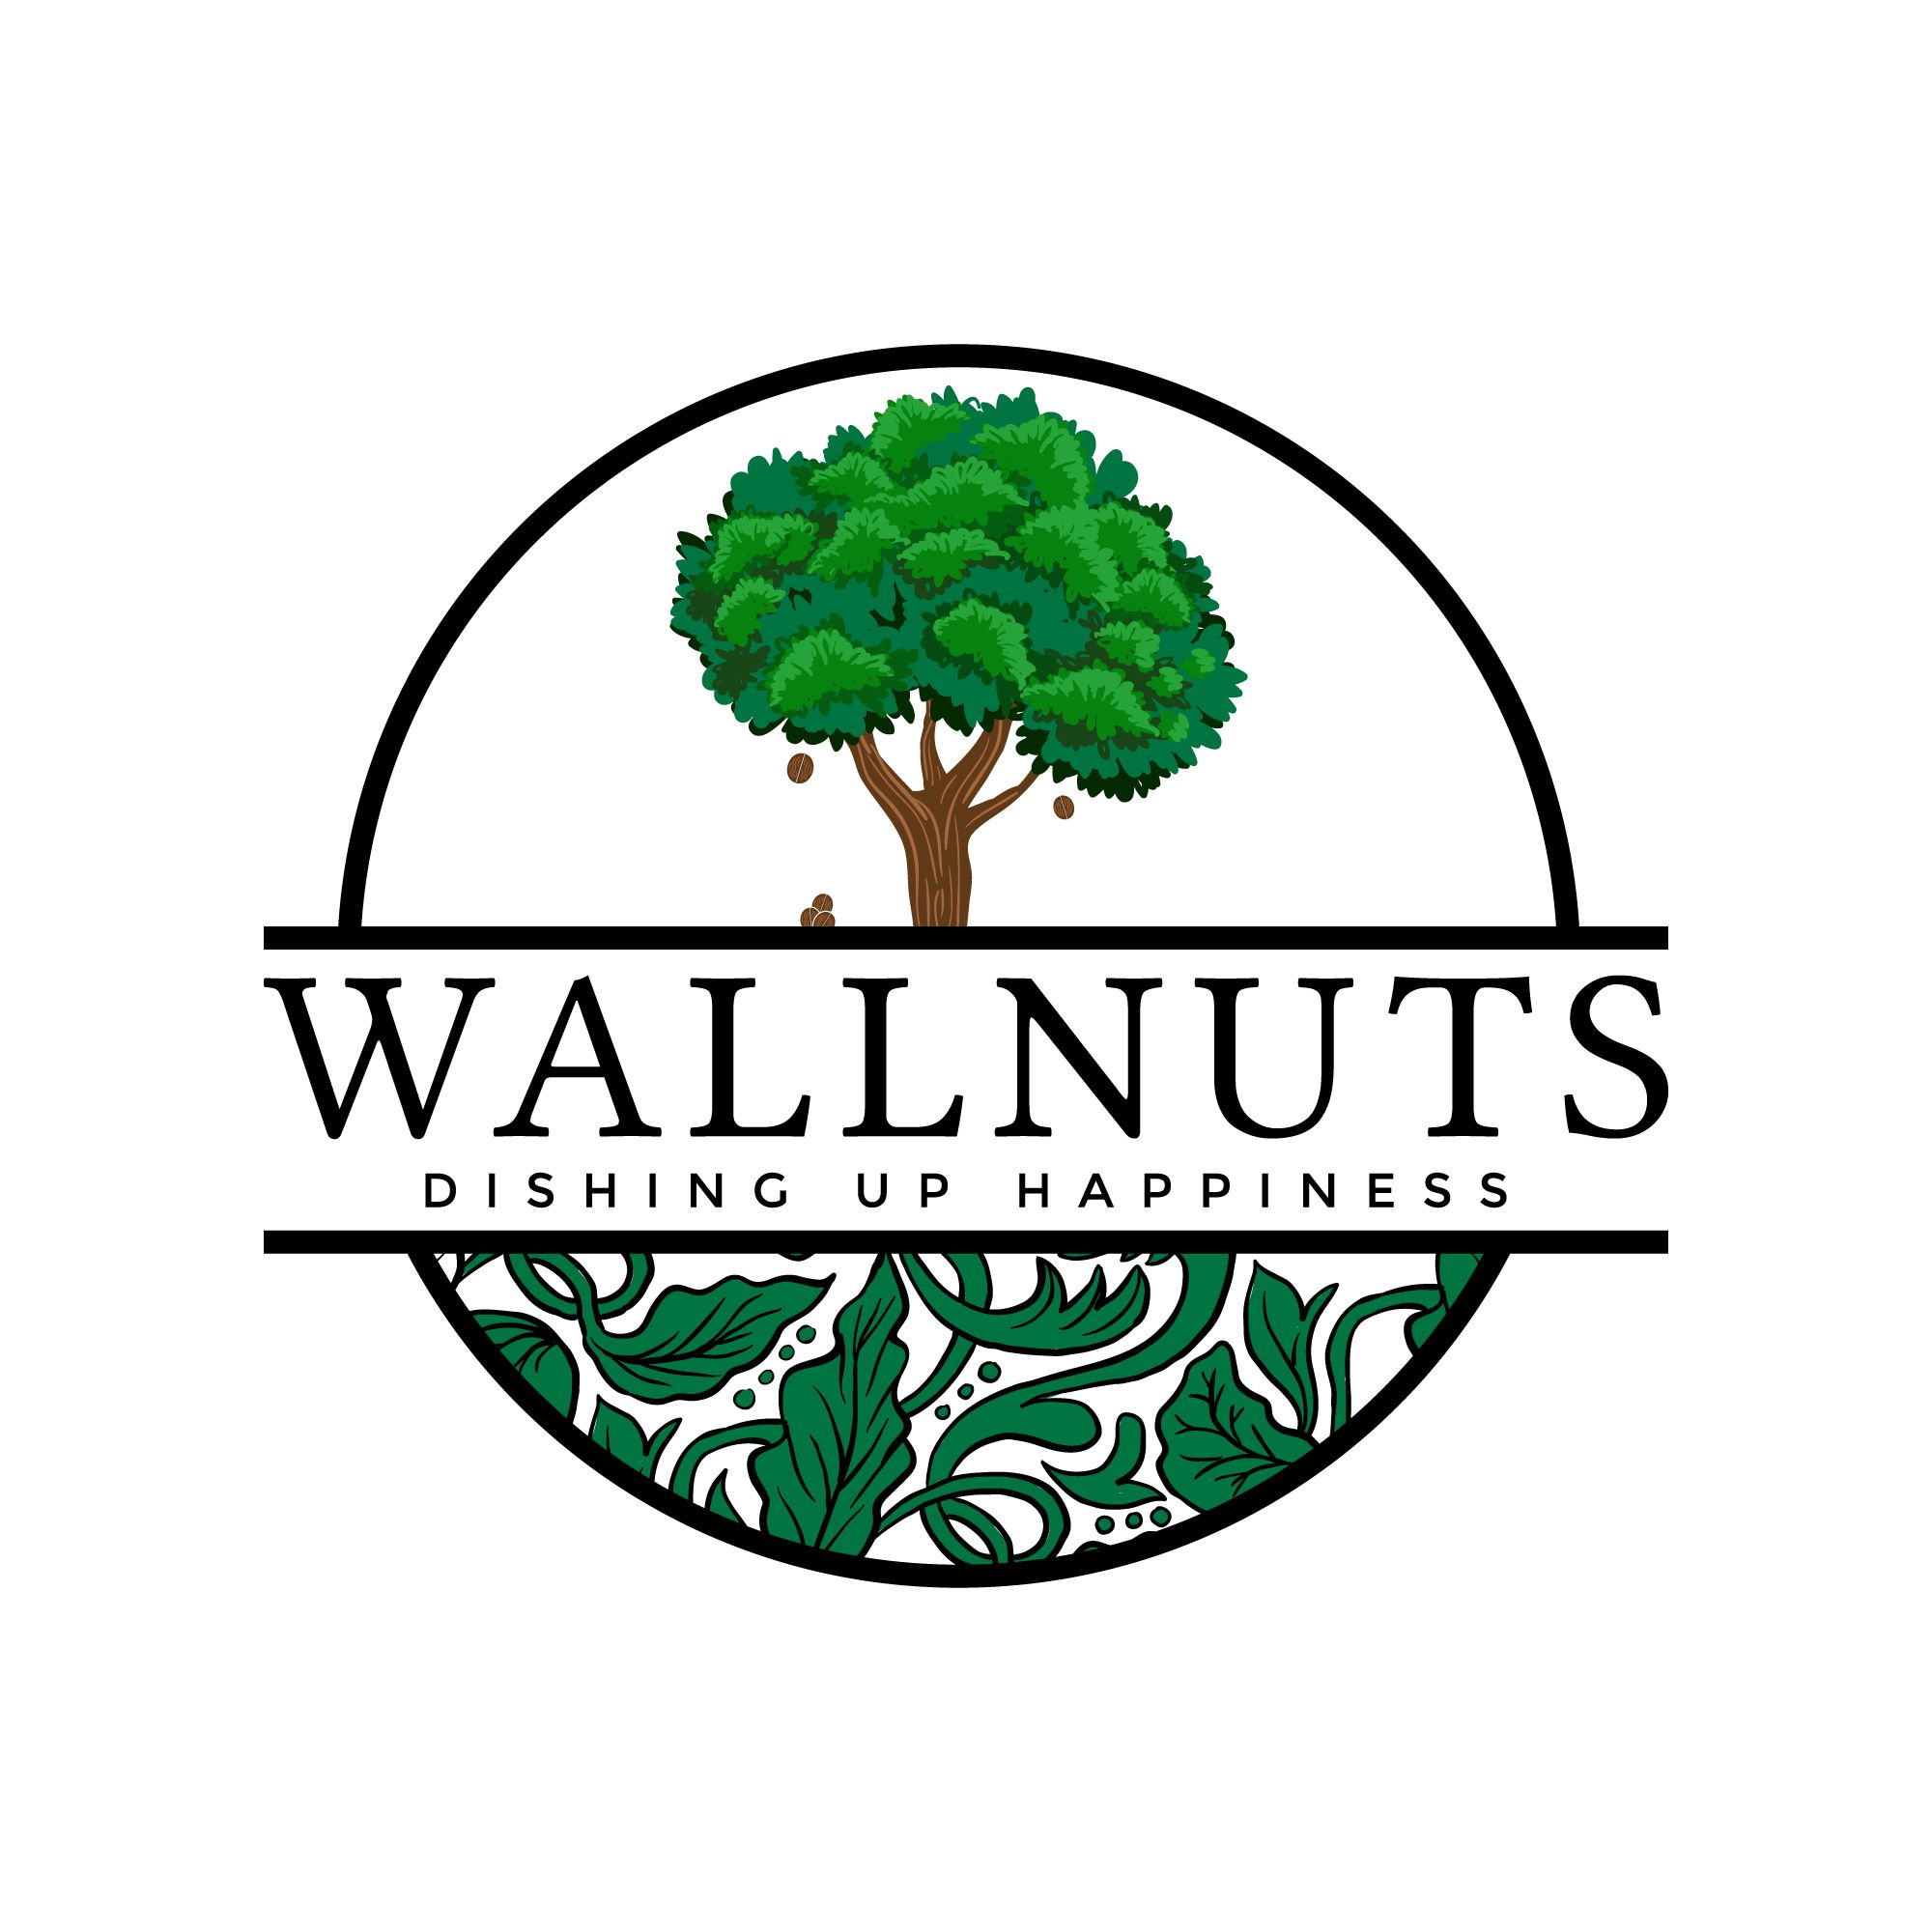 Farm Fueled, Chef-Driven - Wallnuts Expressive Catering